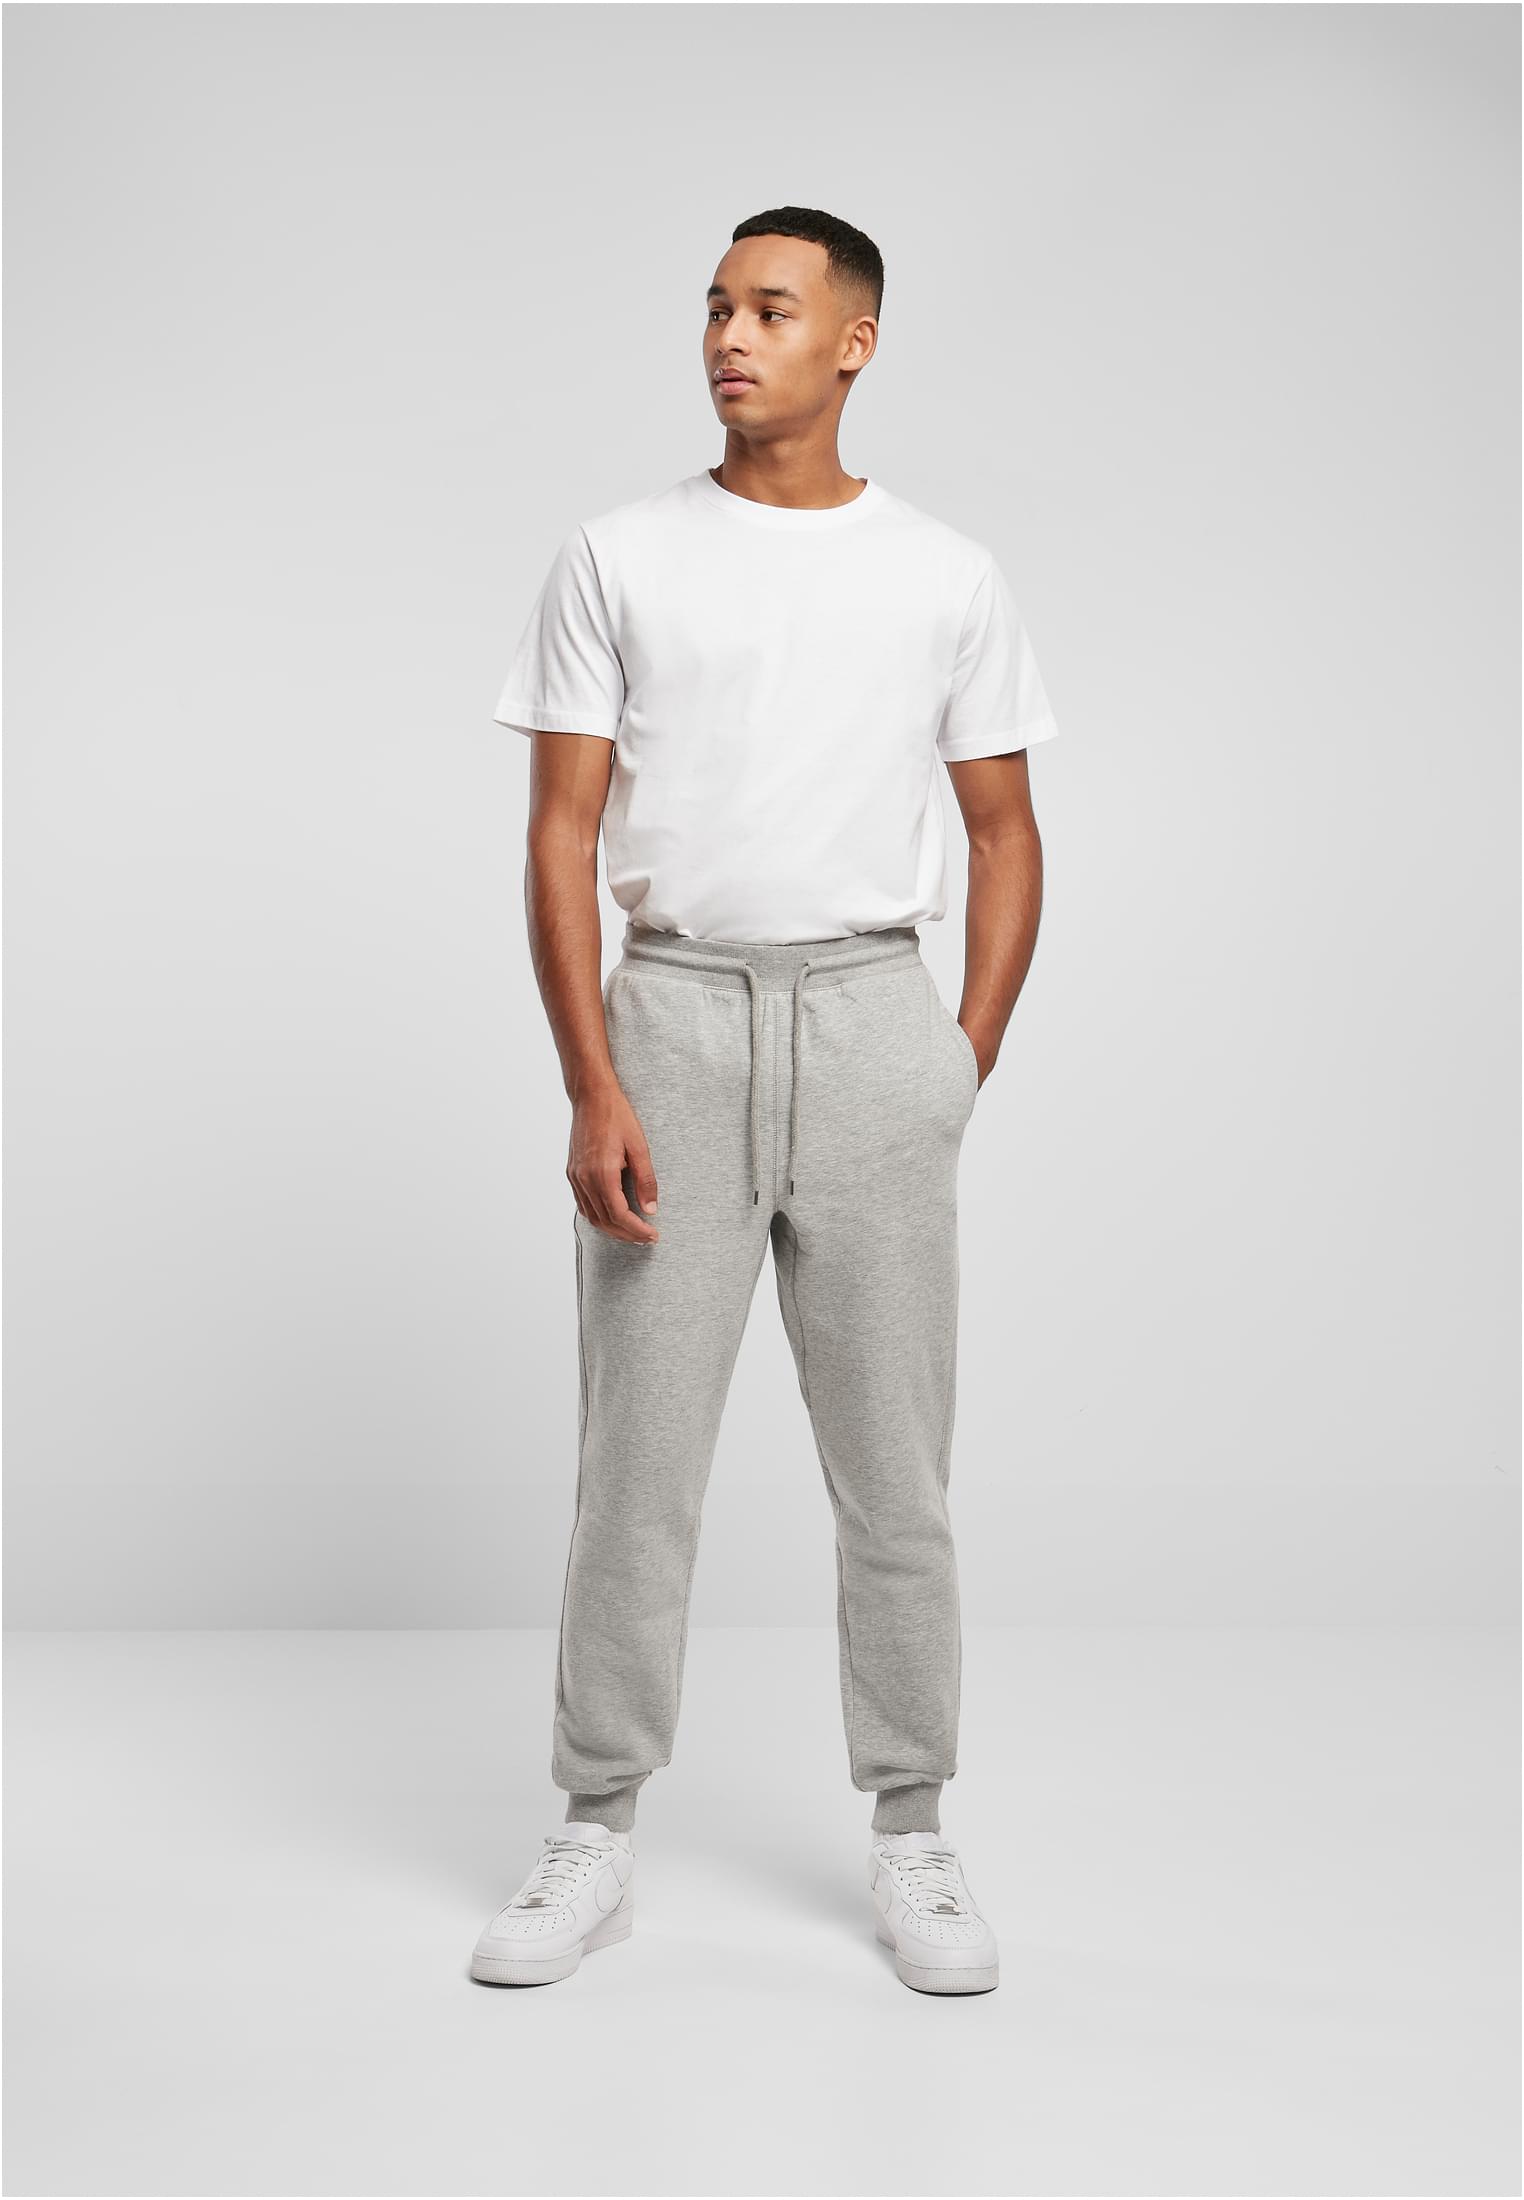 Herren Basic Sweatpants in Farbe grey